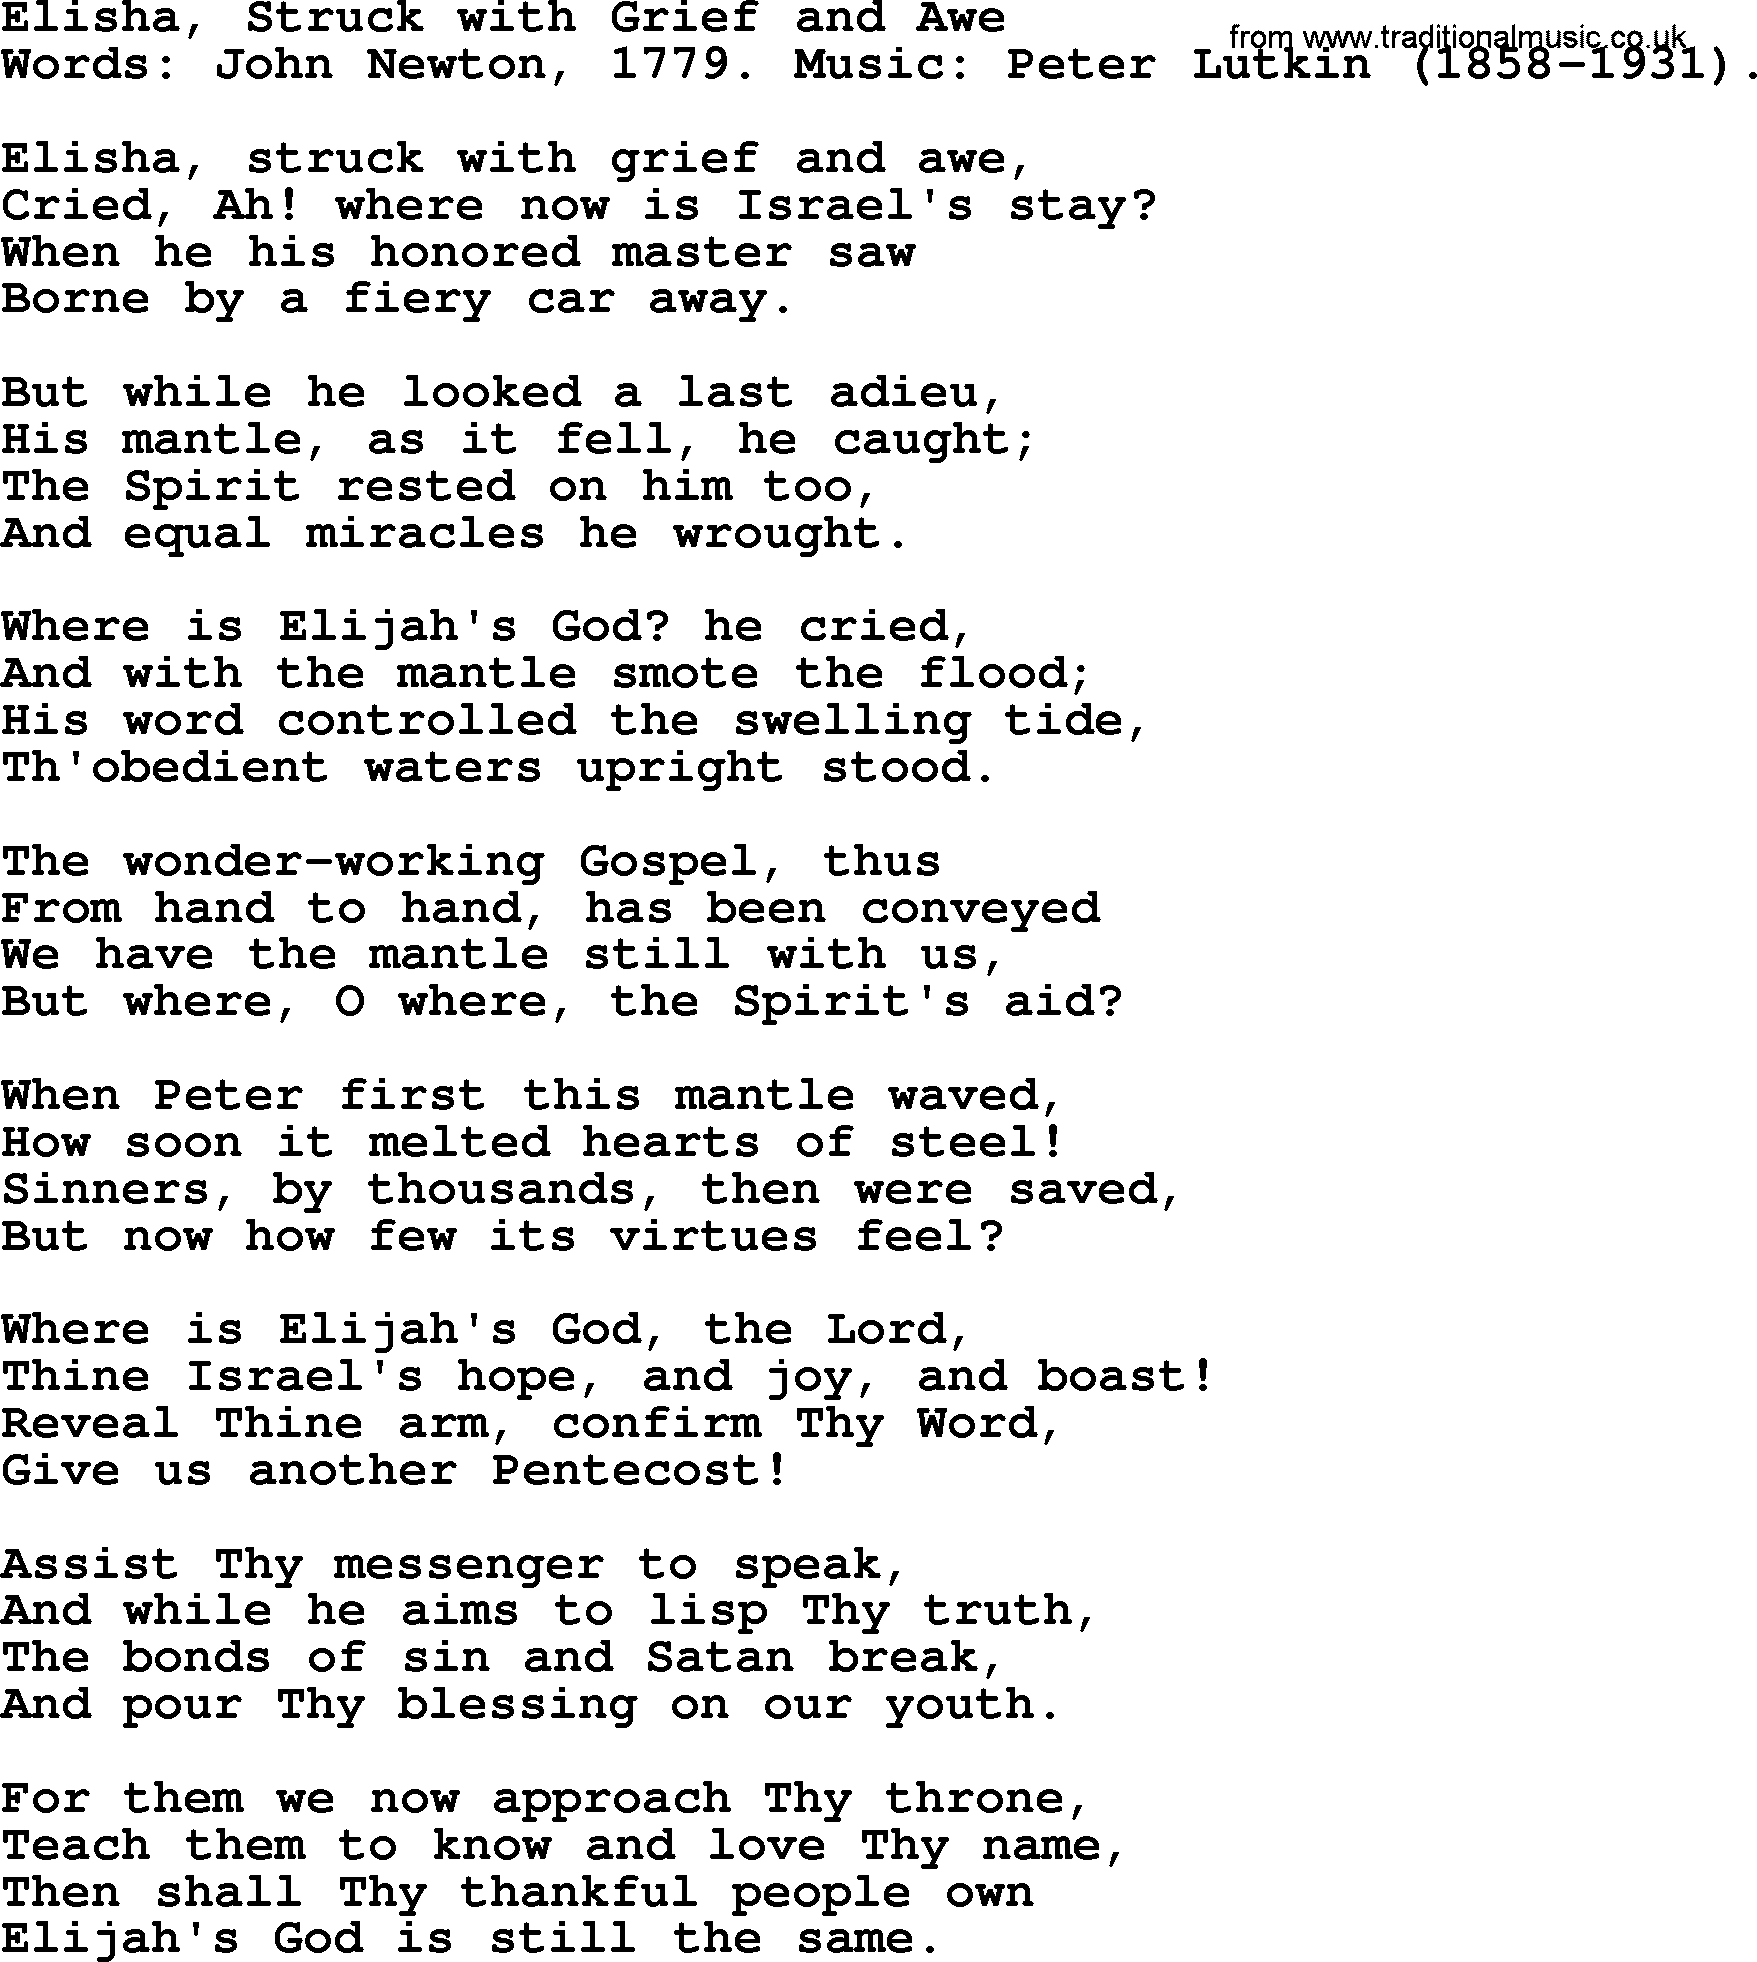 John Newton hymn: Elisha, Struck With Grief And Awe, lyrics